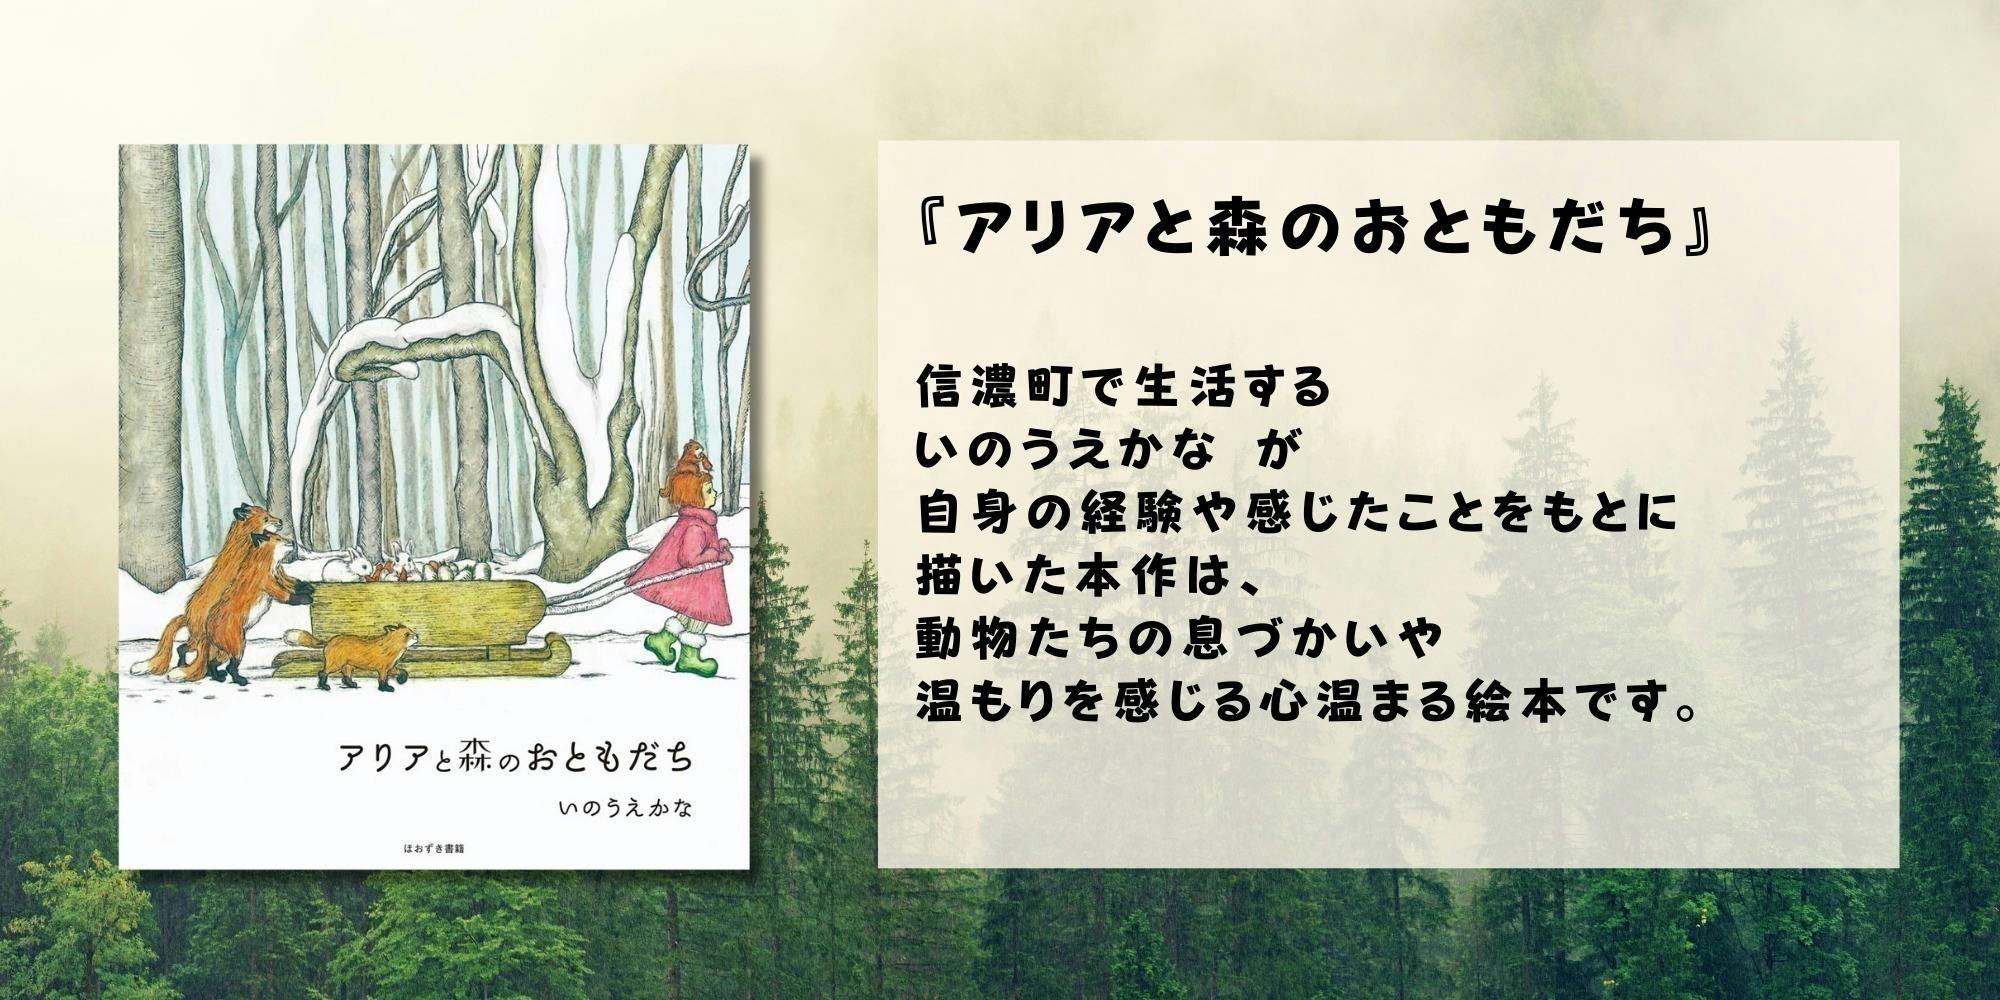 CAMPFIRE　長野県信濃町「黒姫童話館」に、豊かな心を育む“知育あそびエリア”を作りたい！　(キャンプファイヤー)